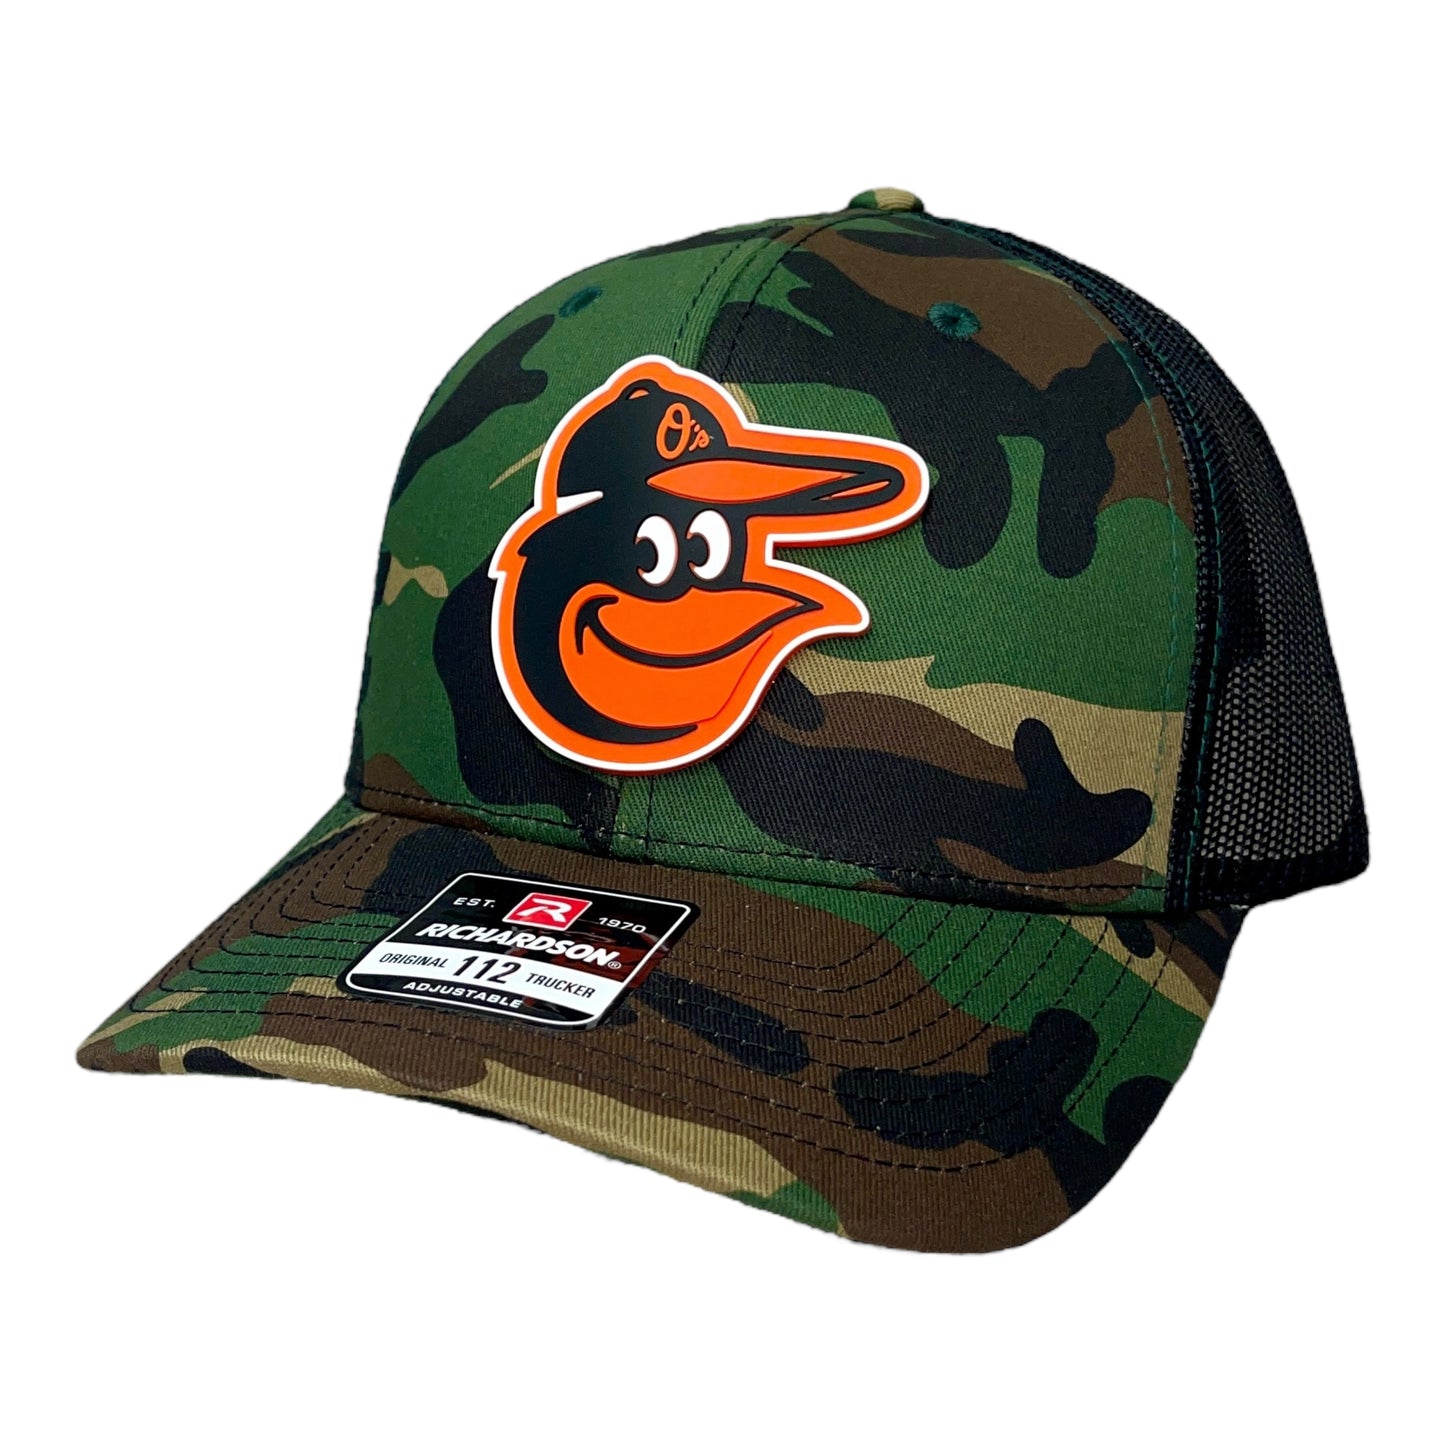 Baltimore Orioles 3D Snapback Trucker Hat- Army Camo/ Black